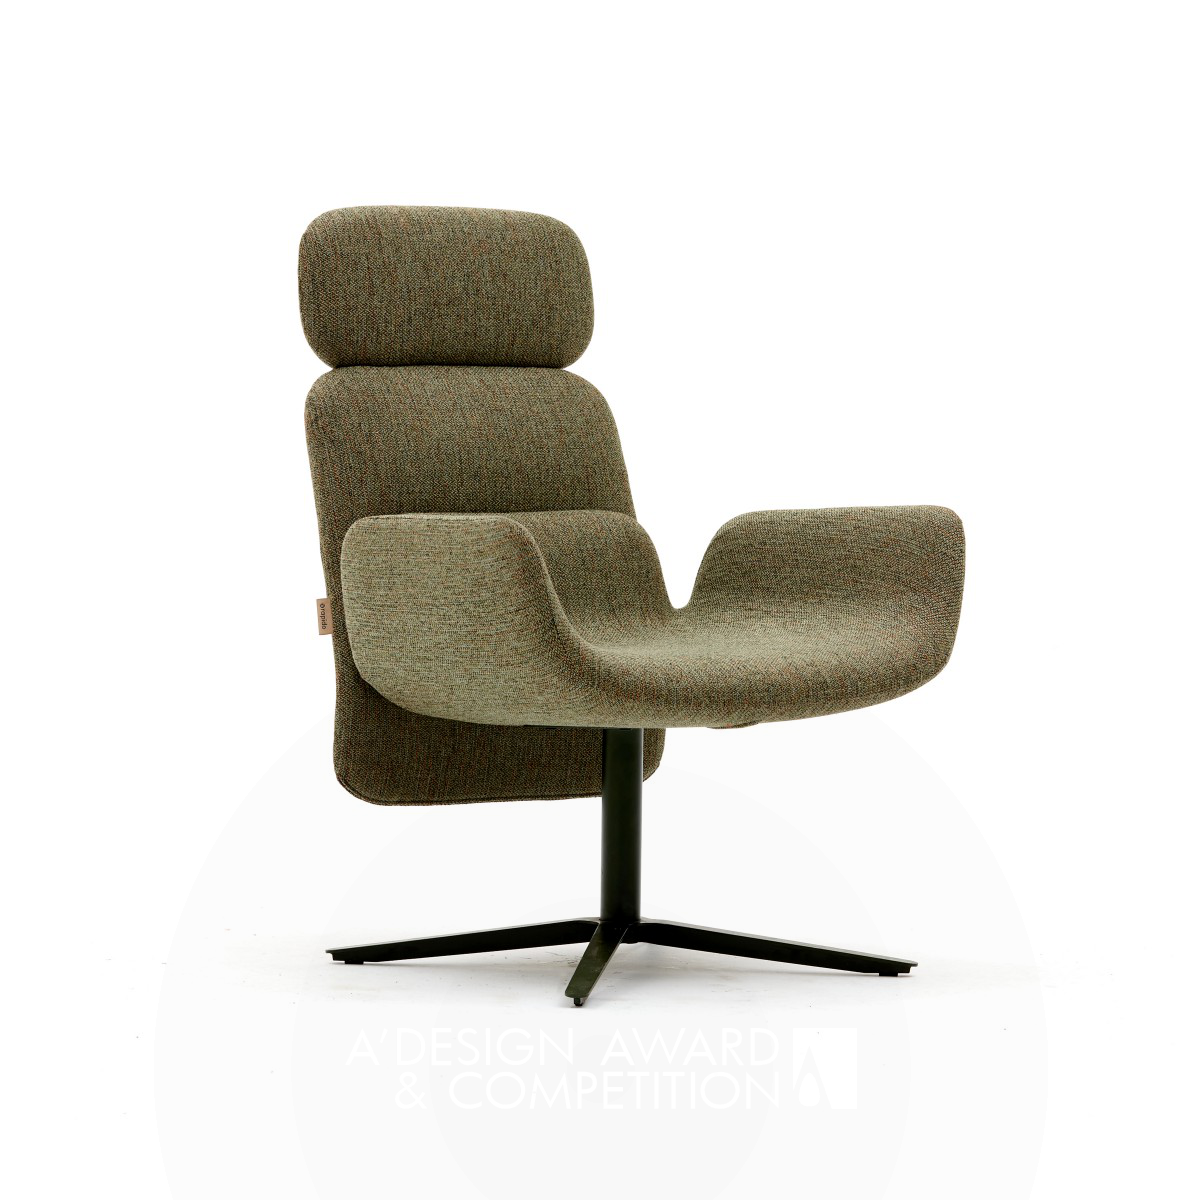 Ruya Akyol wins Bronze at the prestigious A' Office Furniture Design Award with Tux Chair.